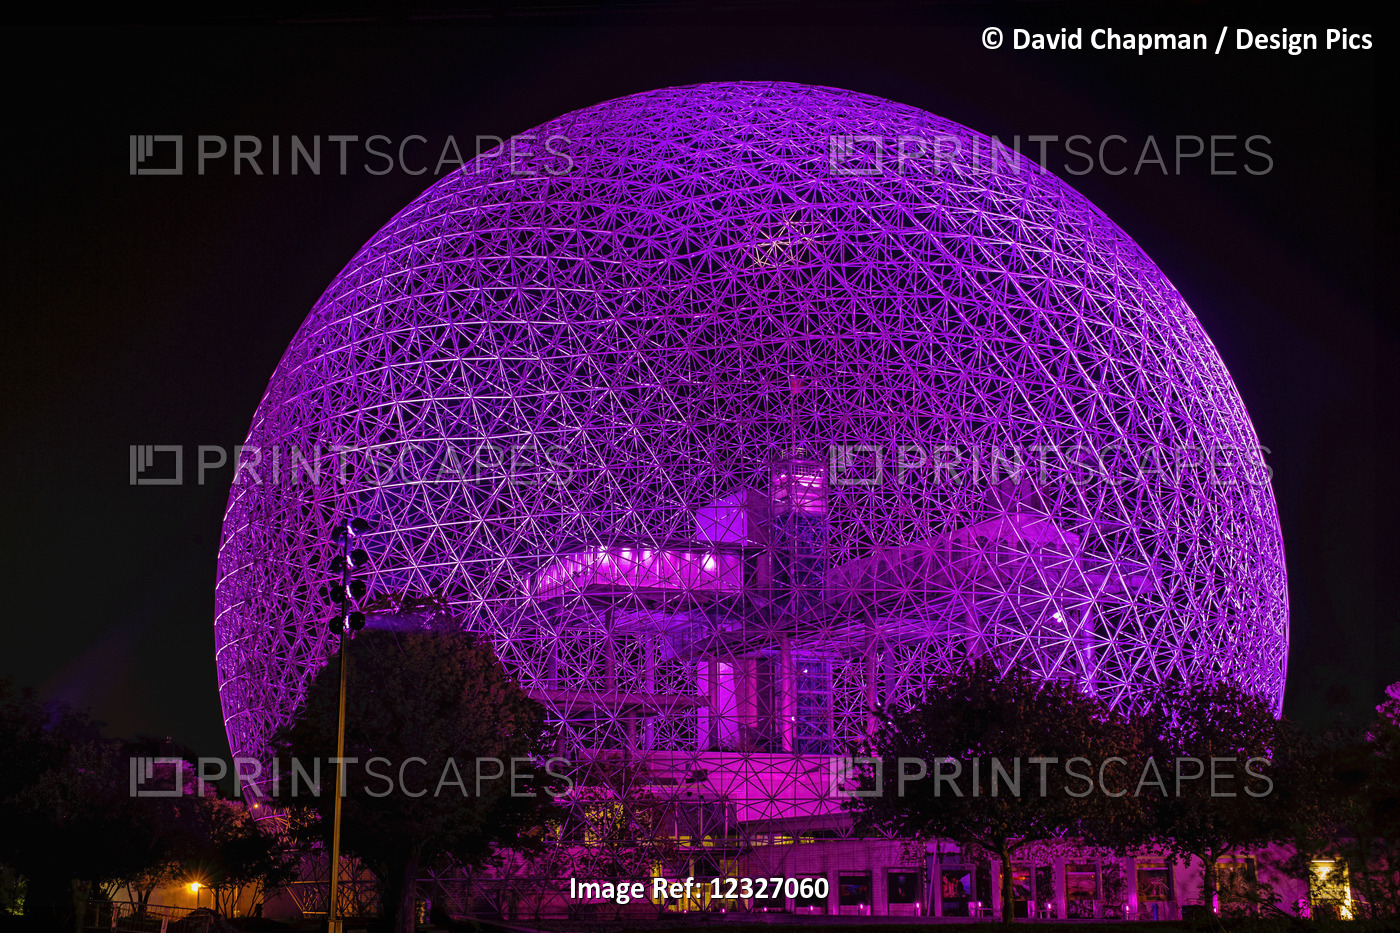 The purple biosphere